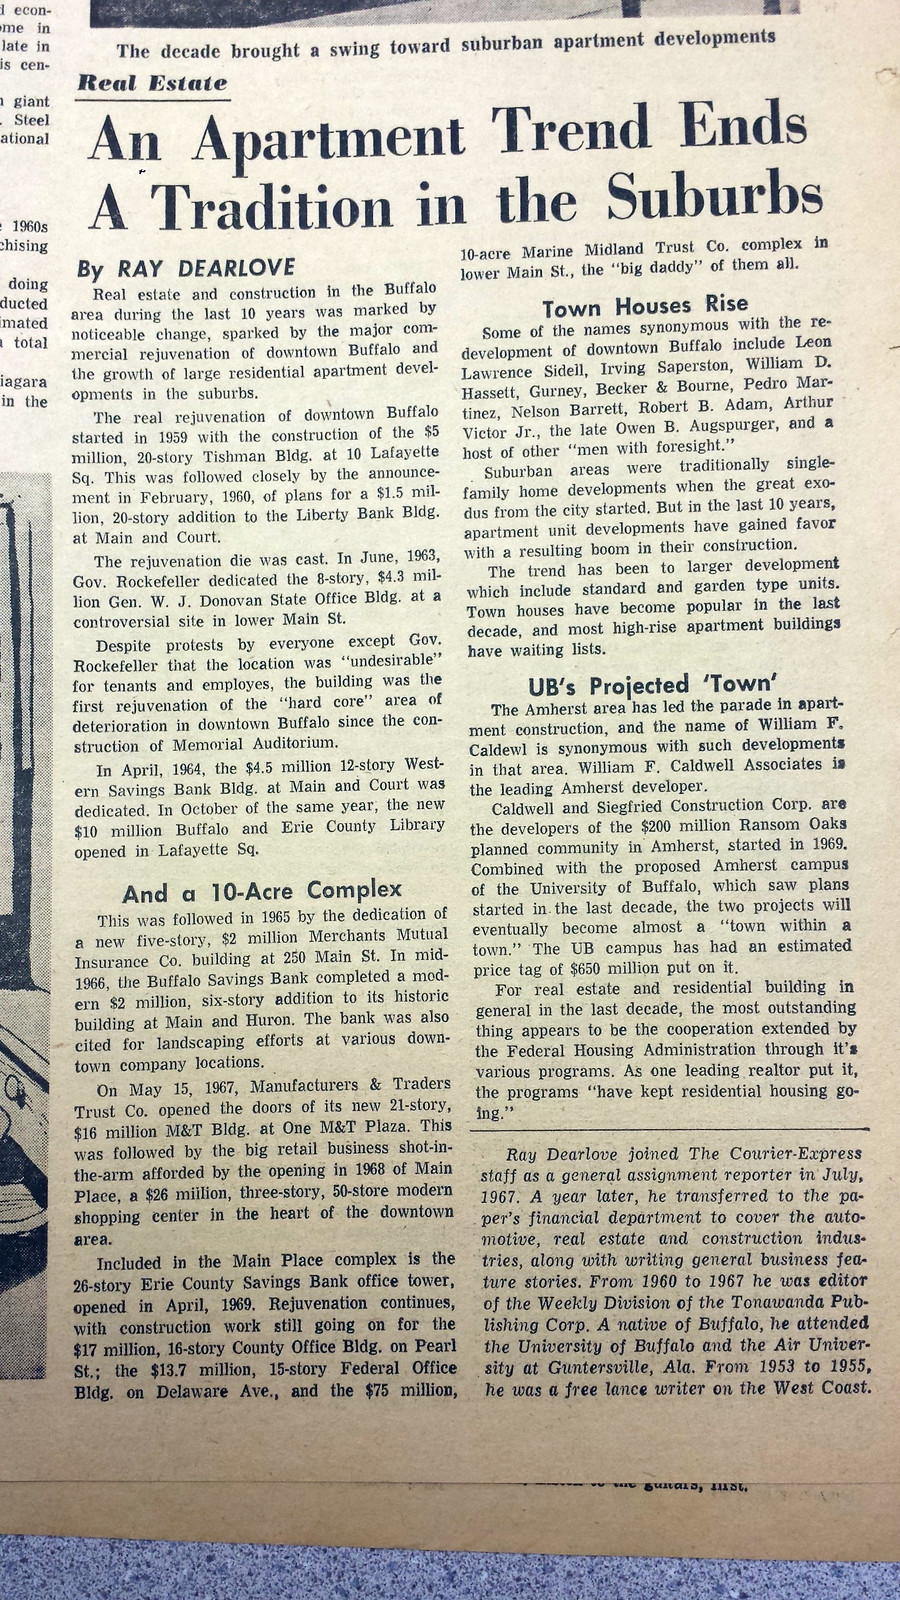 Buffalo Courier Express Dec 1969